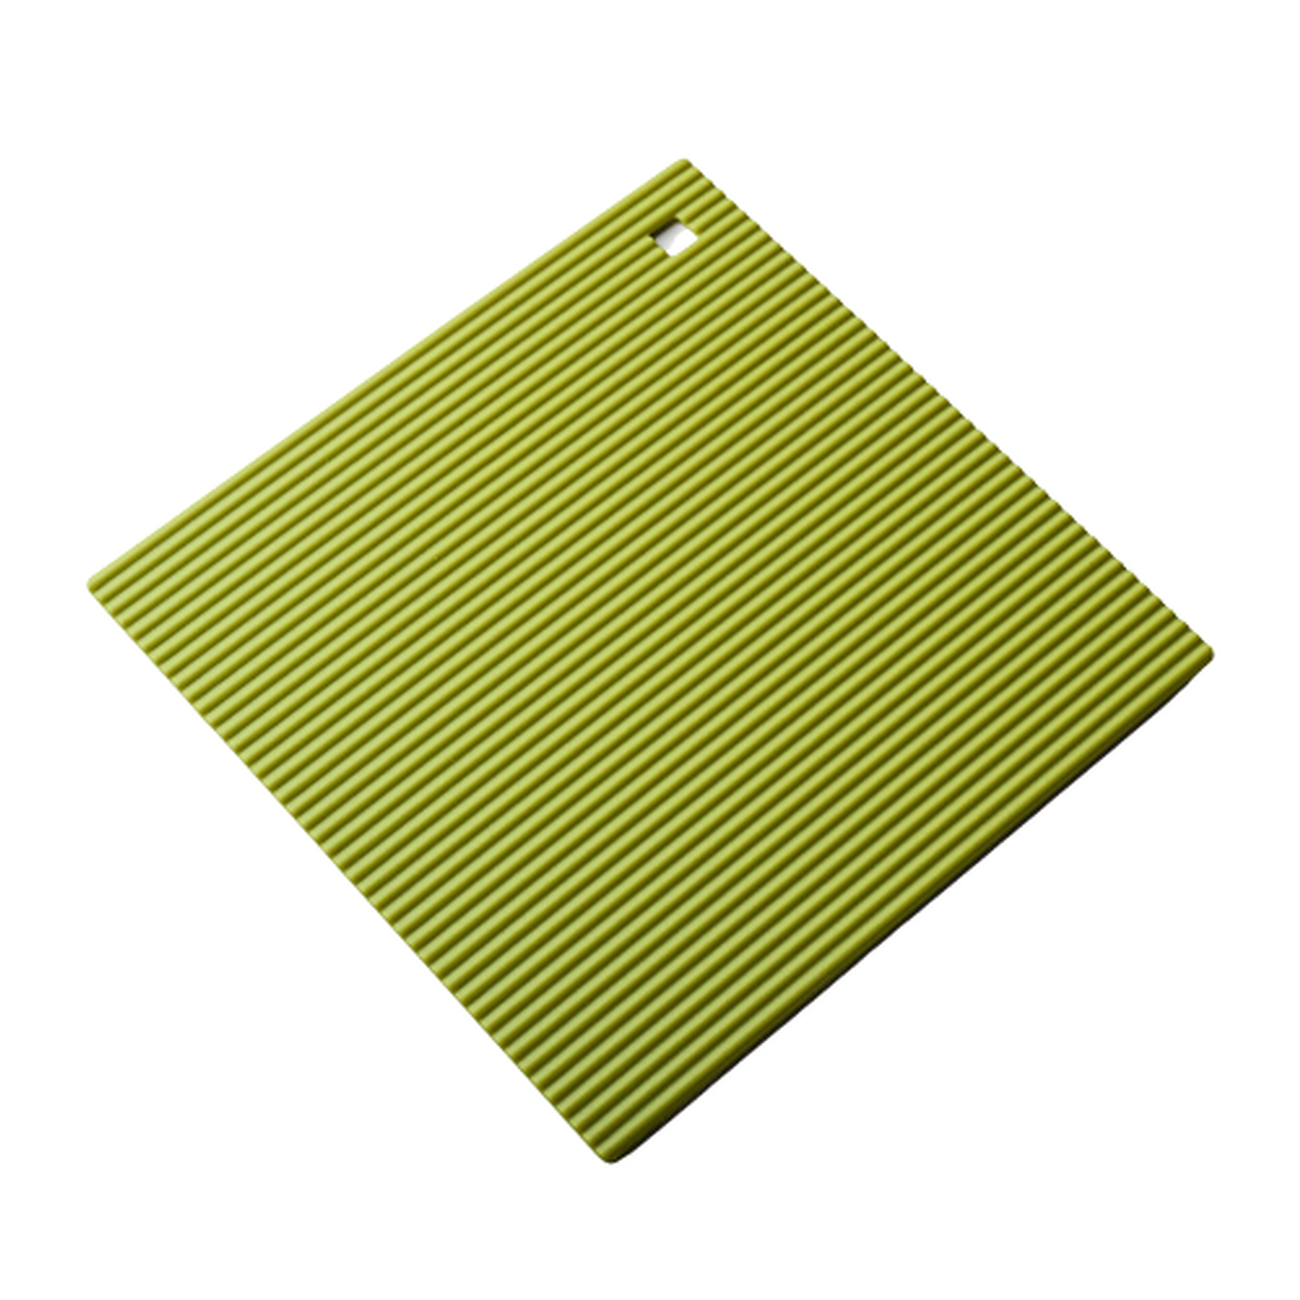 zeal-silicone-mat-neon-trivet - Zeal Silicone Heat Resistant Non-Slip Trivet Neon